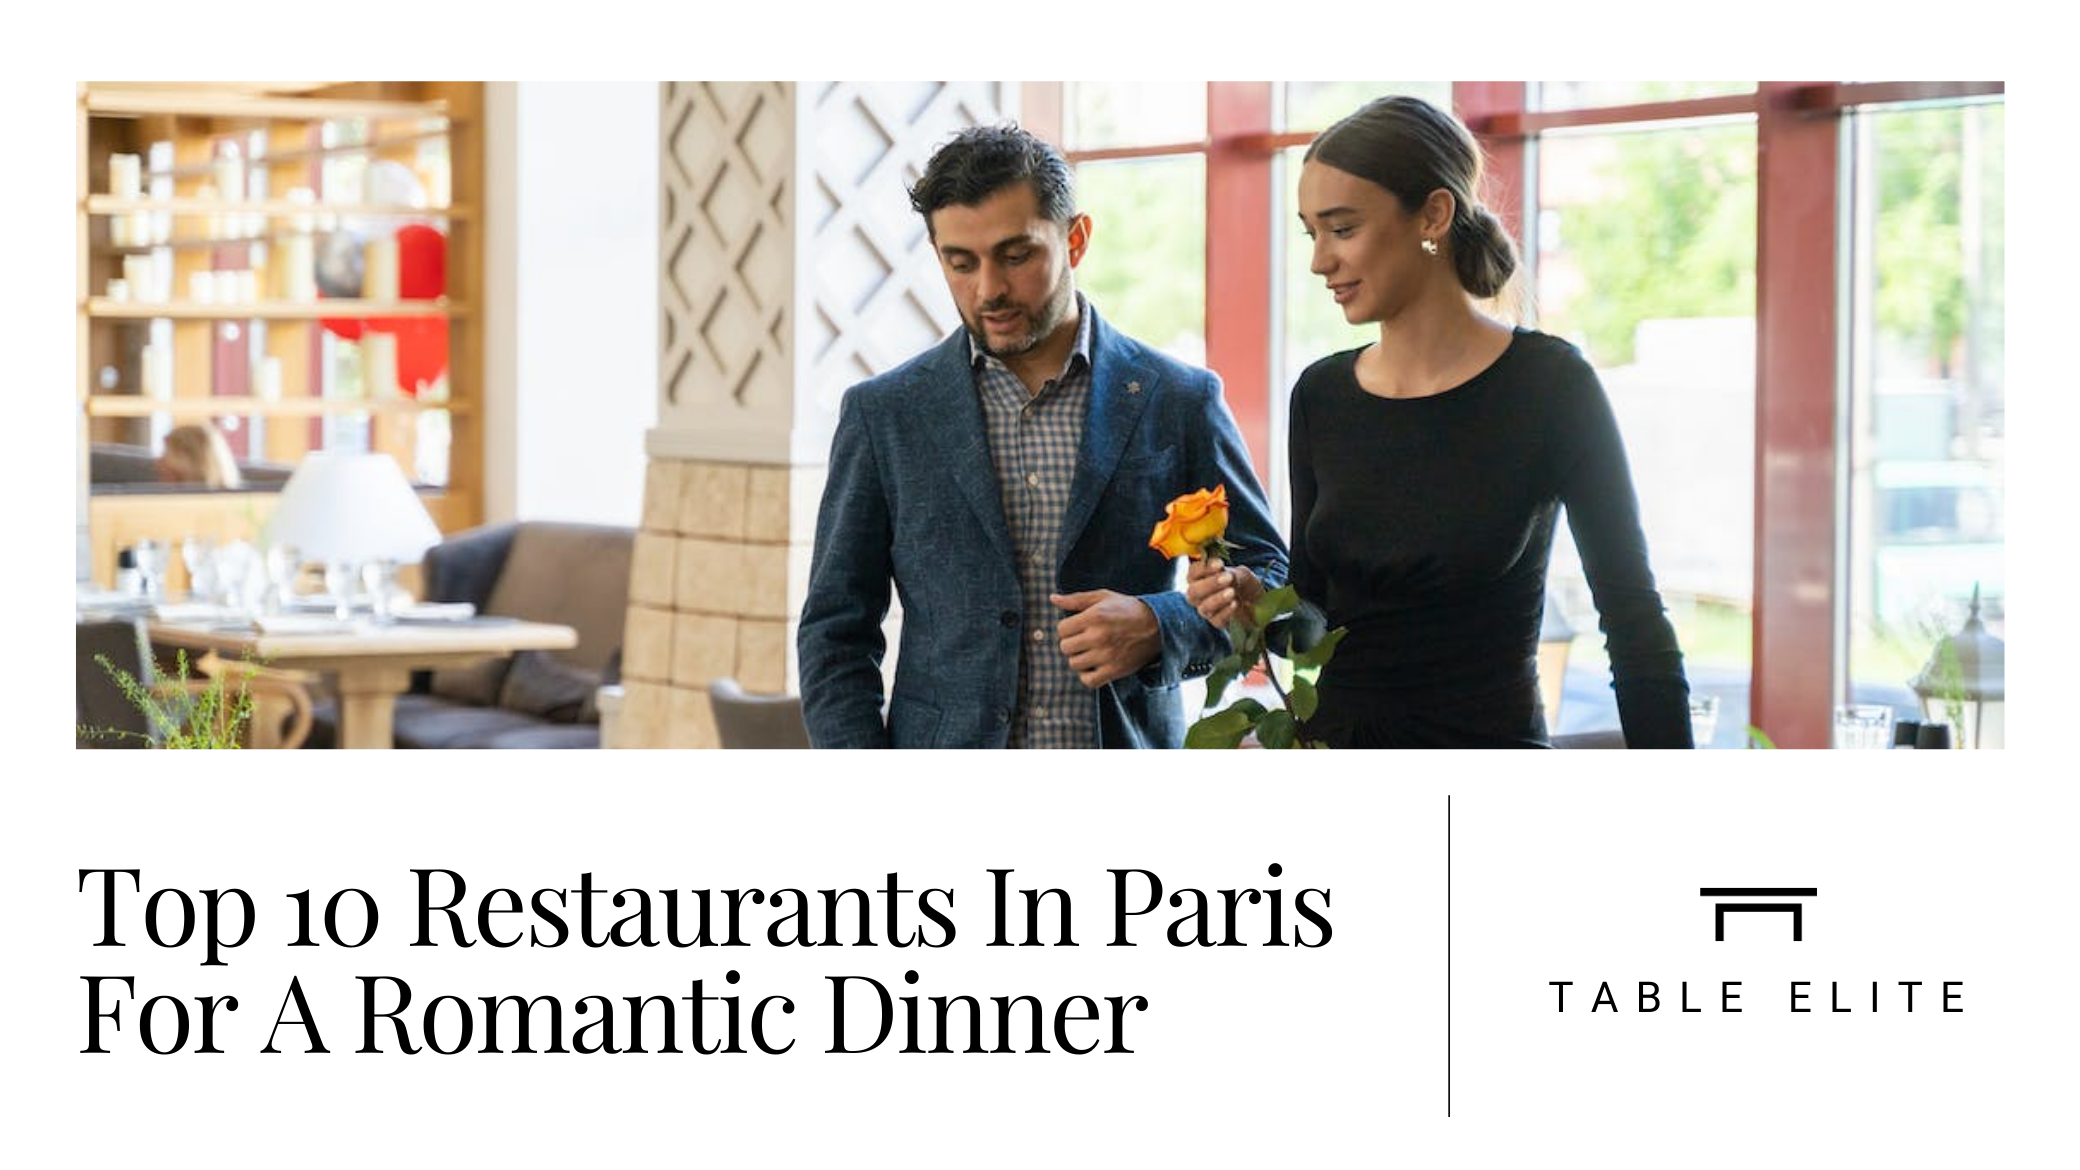 Top 10 Restaurants in Paris for a Romantic Dinner